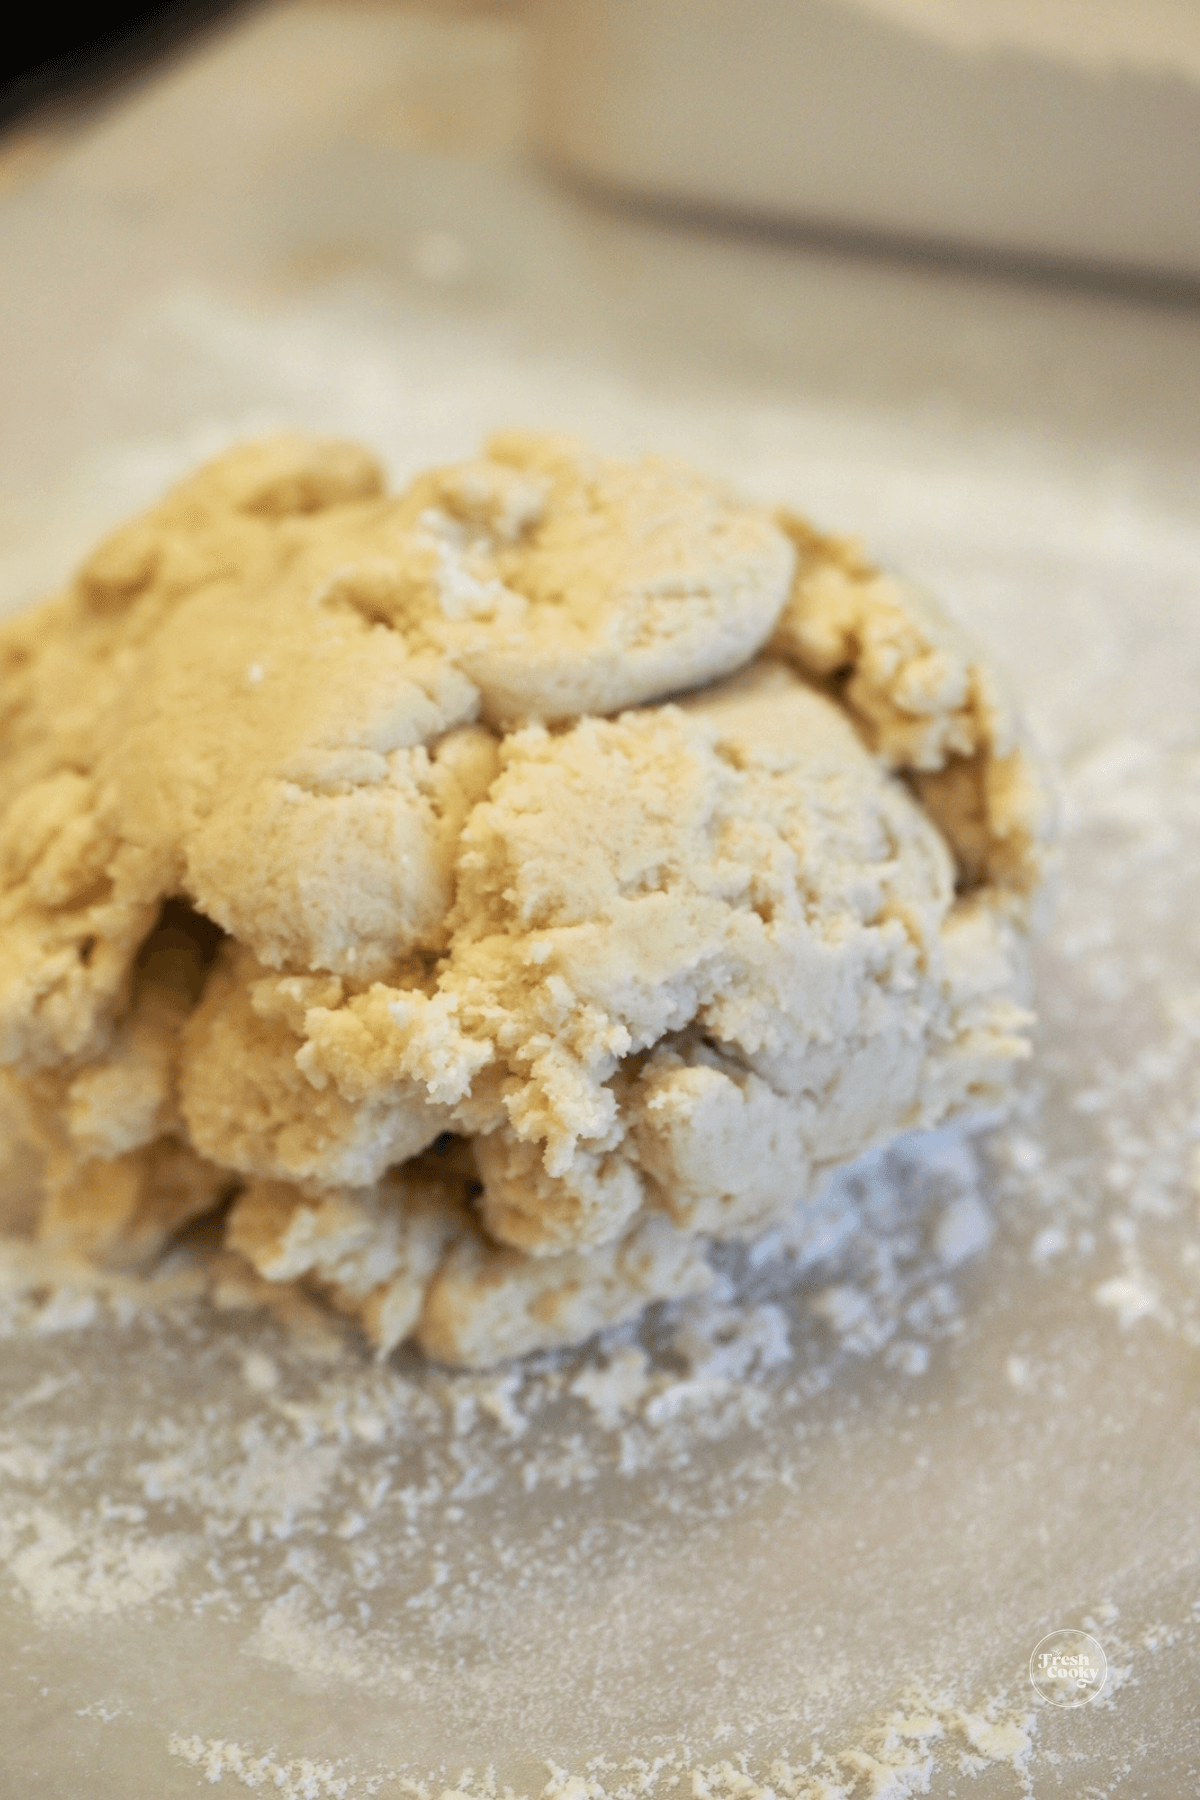 Crumbly shortbread dough on baking sheet.